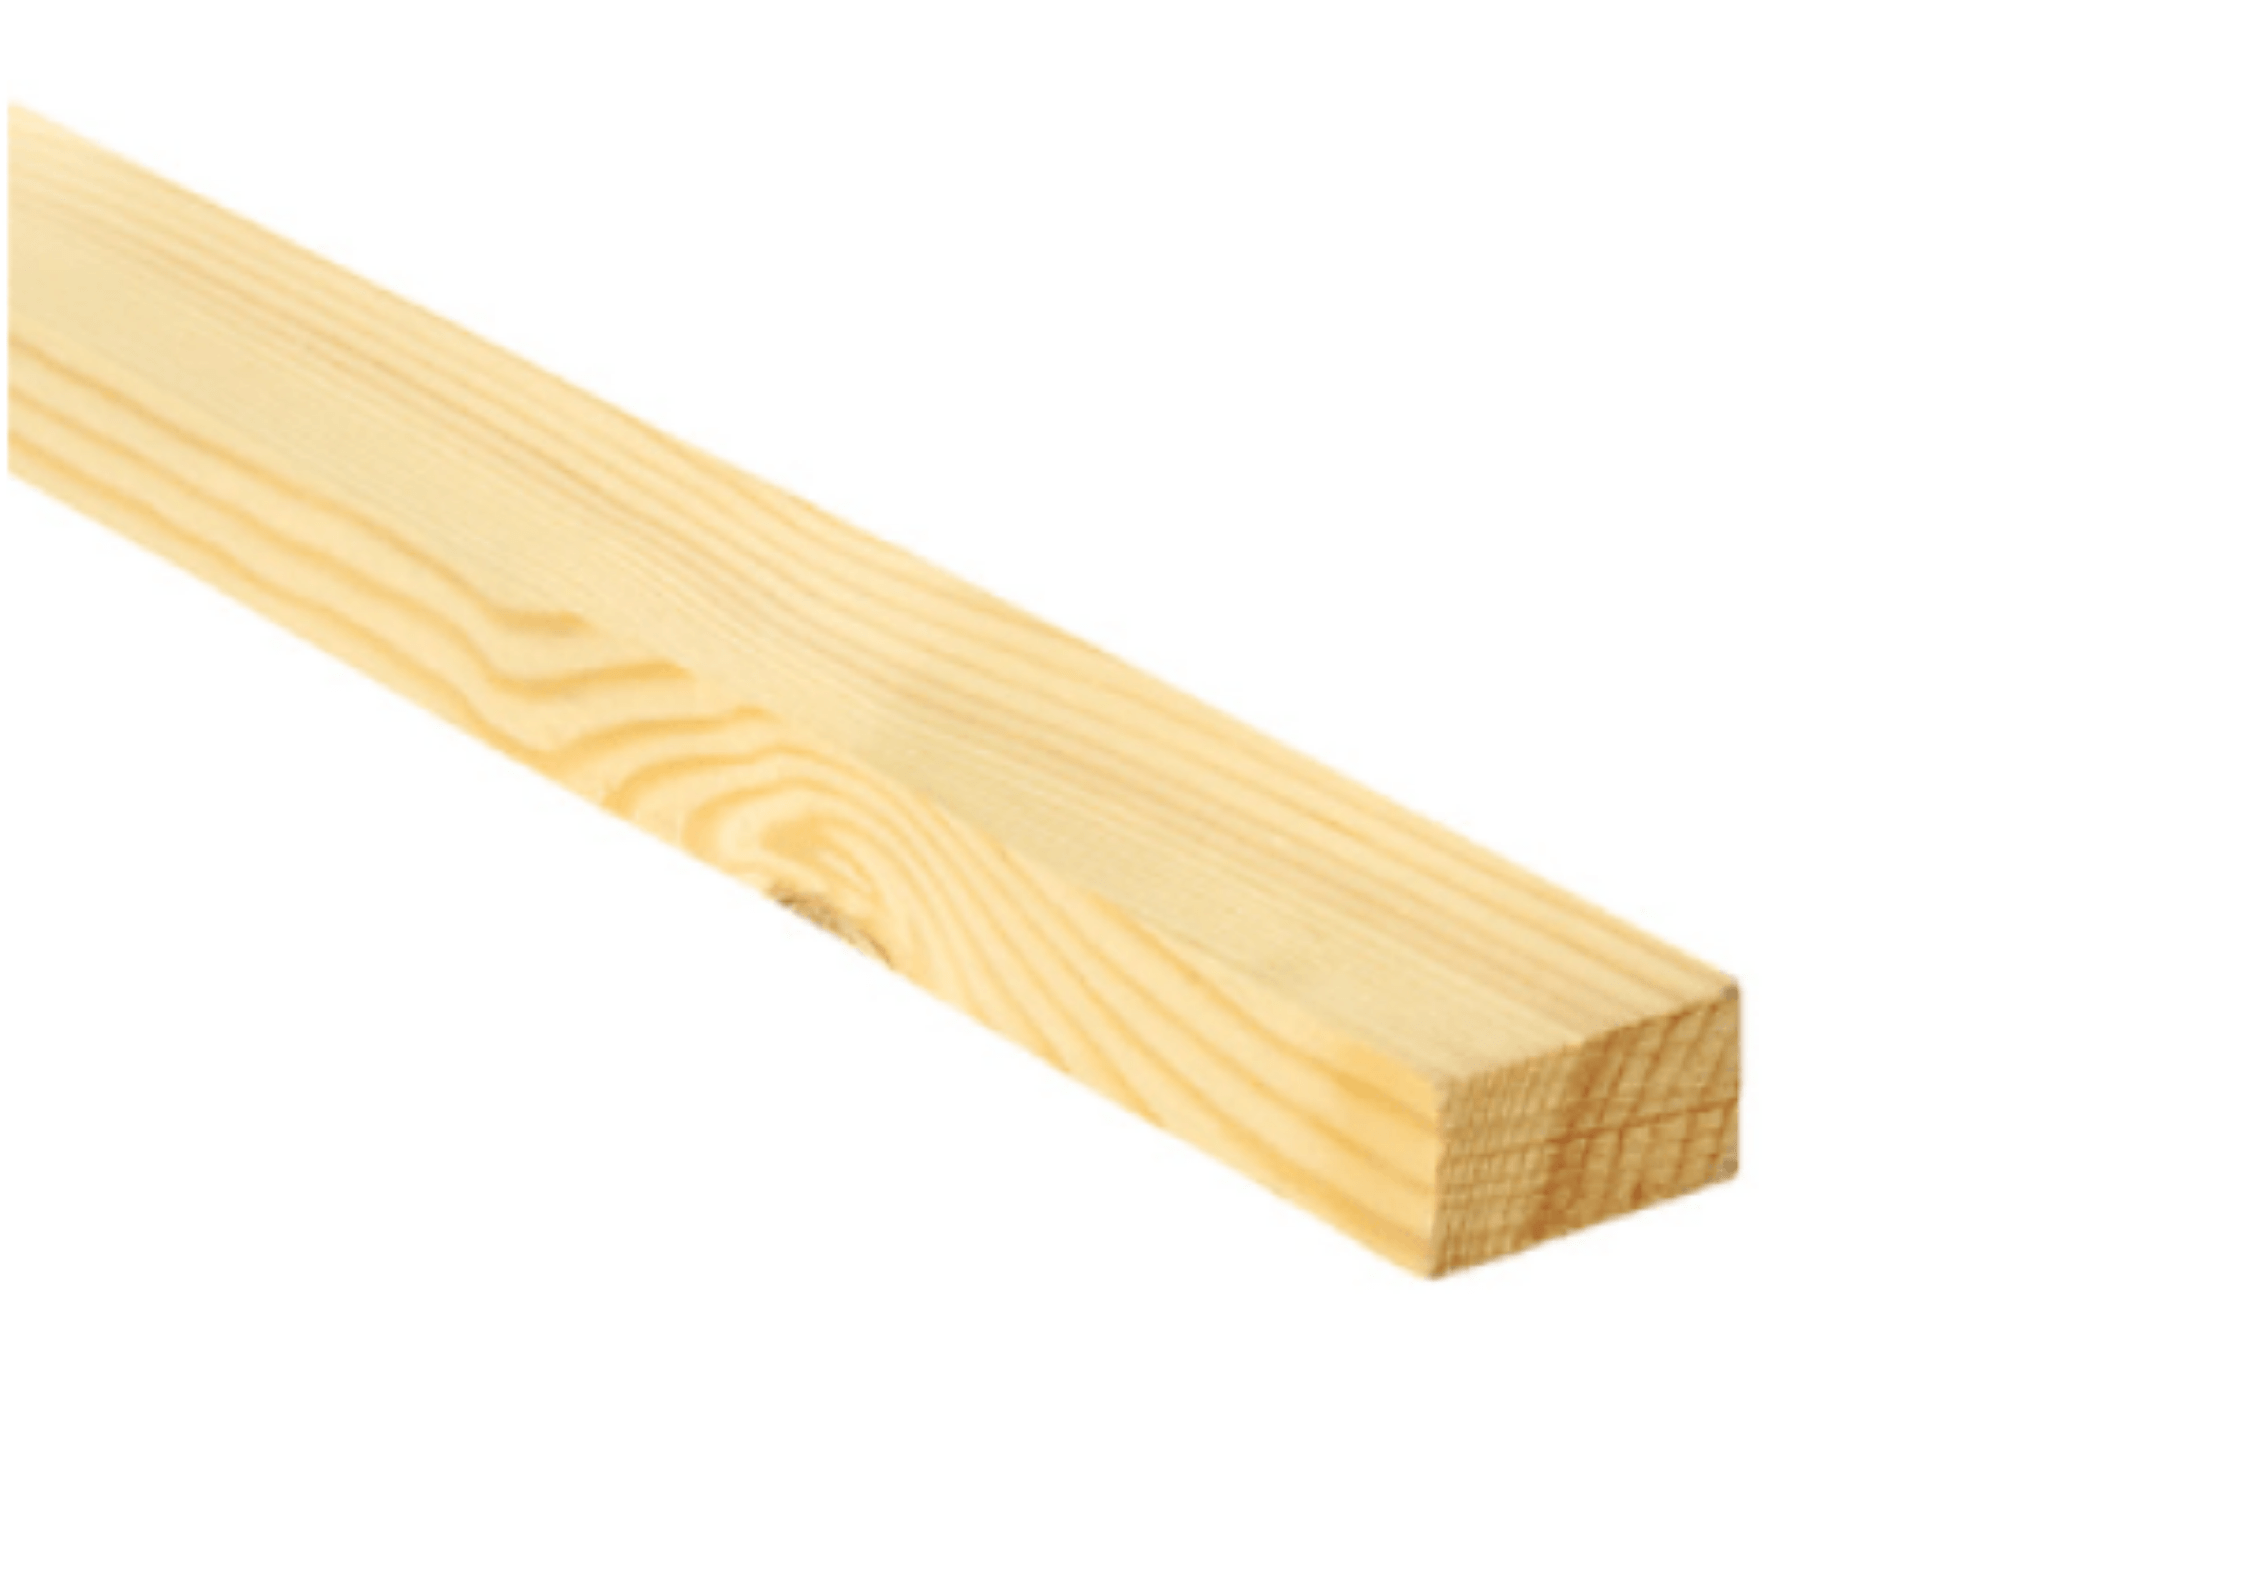 Builders Merchant Direct Construction Timber PSE Timber 18mm x 44mm x 2400mm (2x1)